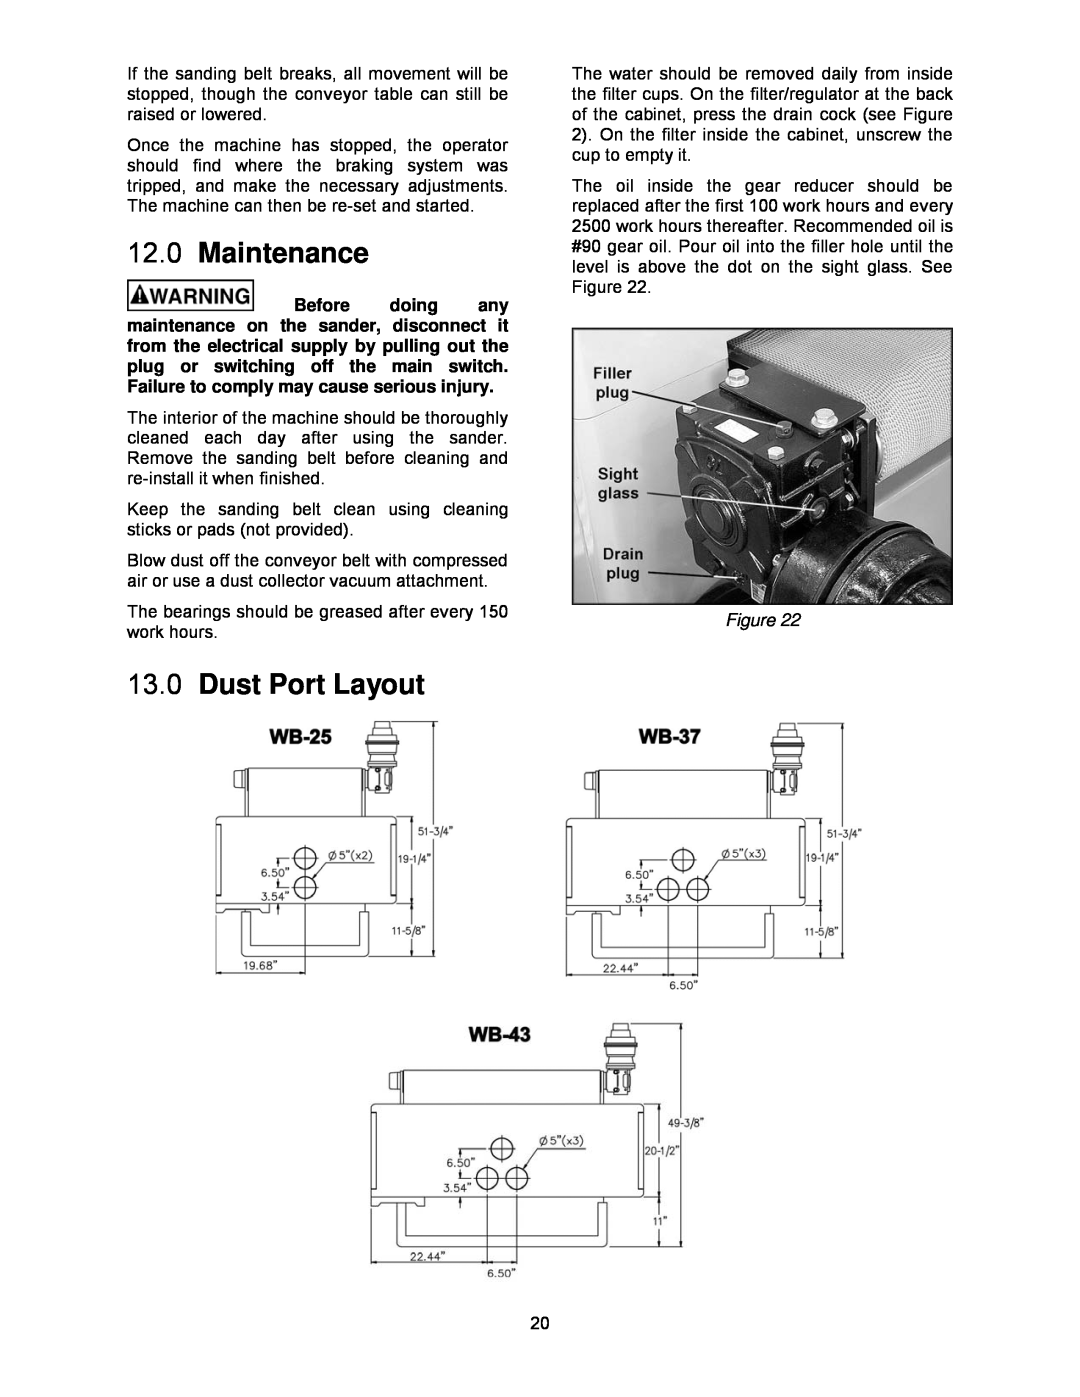 Powermatic WB-43, WB-37, WB-25 operating instructions Maintenance, Dust Port Layout 